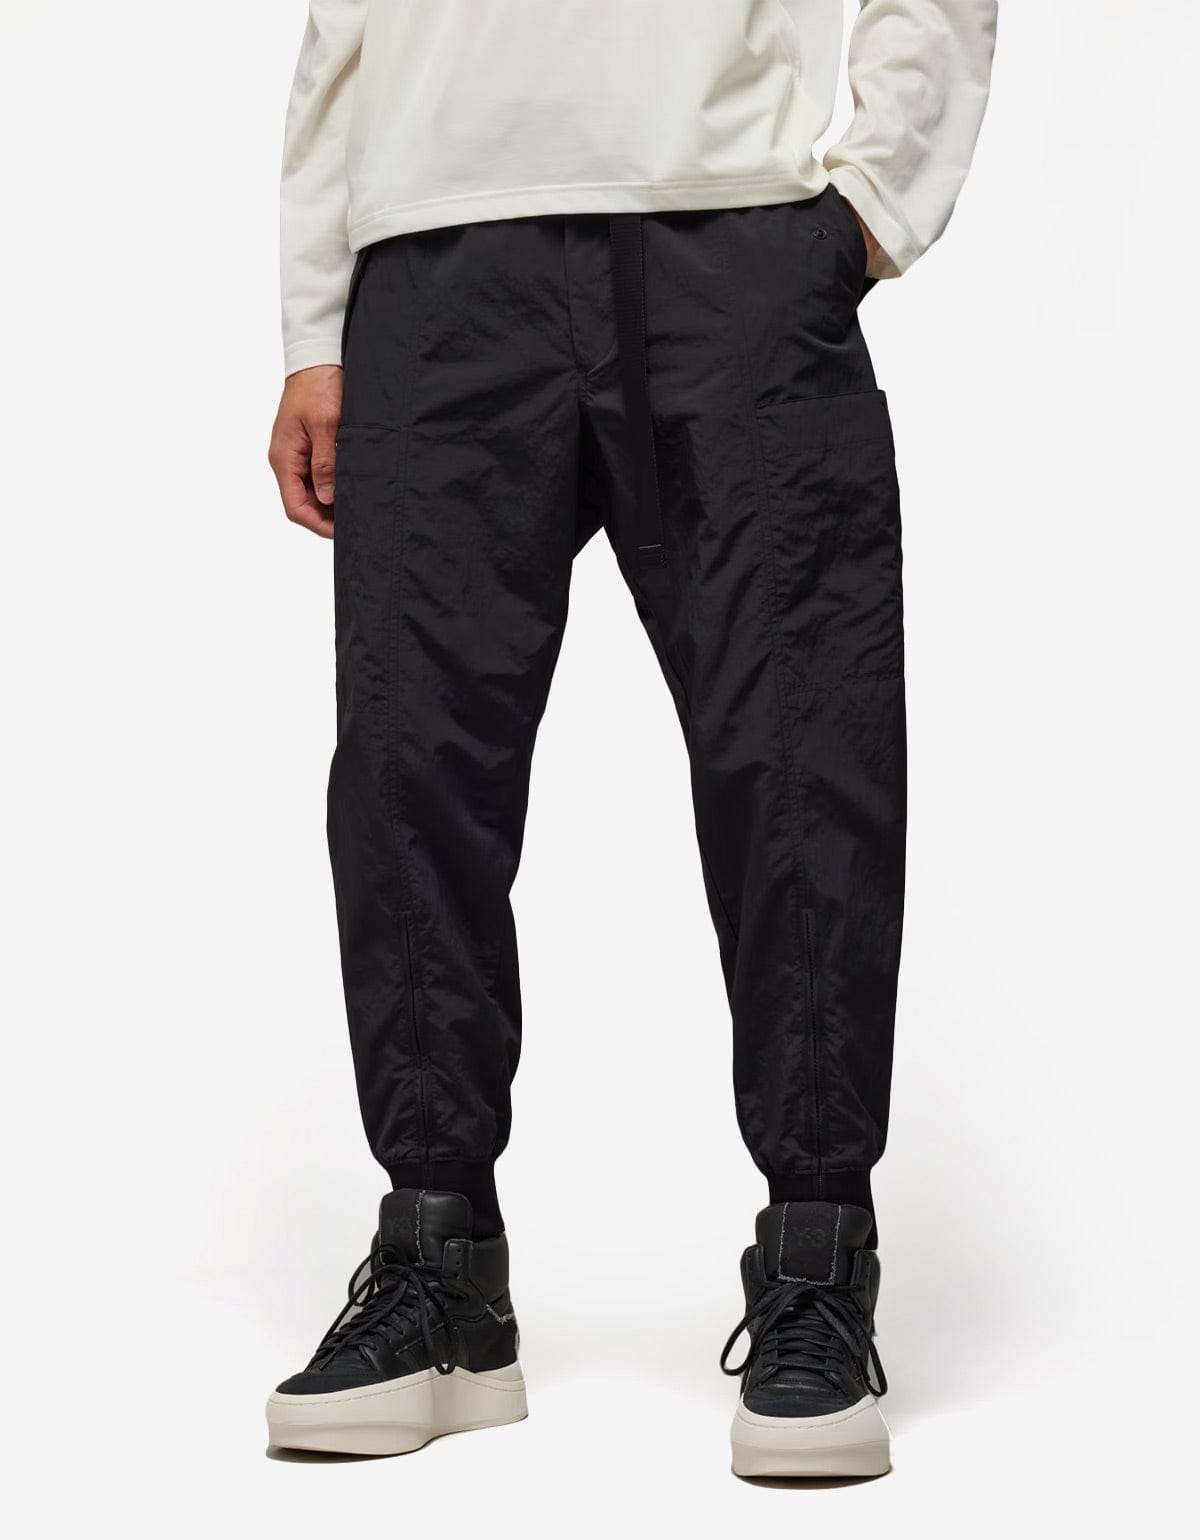 Y-3 Black Crinkle Nylon Cuffed Pants